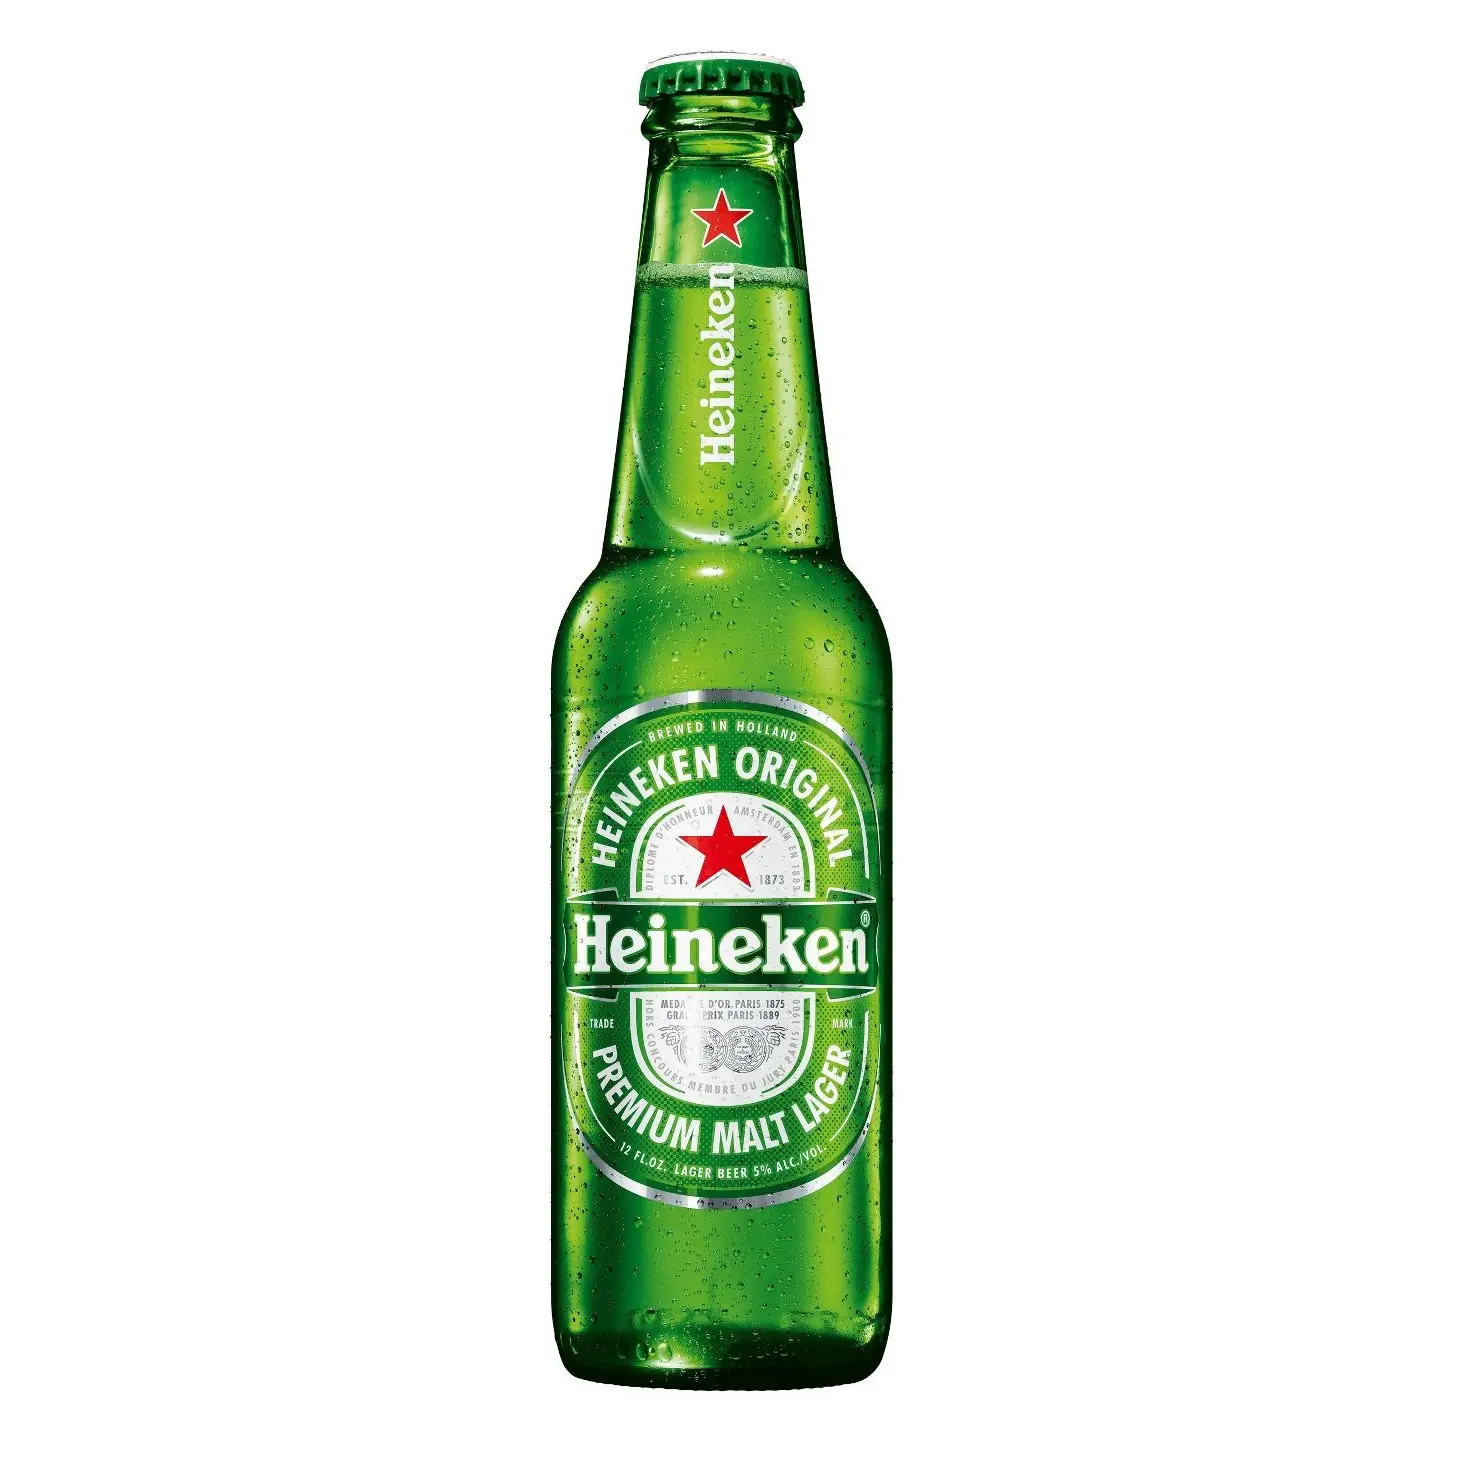 Best Price Heineken Premium Larger Beer Bottles 6 x 330ml Bulk Stock Available With Customized Packing